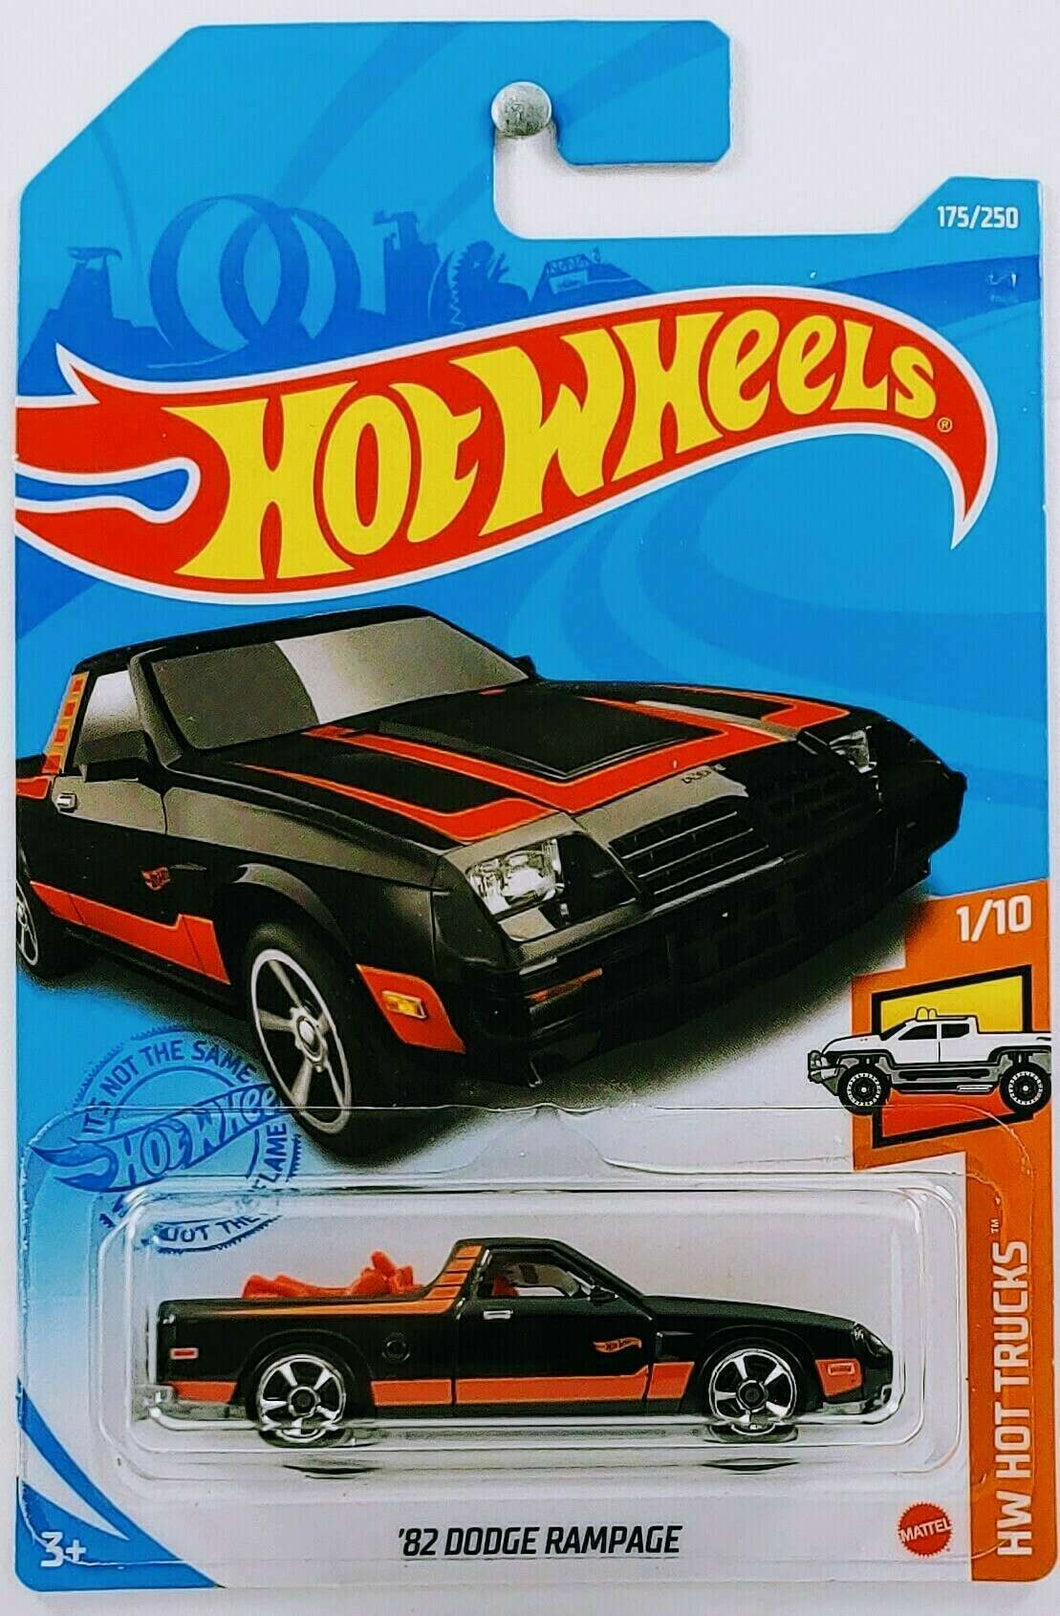 Hot Wheels '82 Dodge Rampage, HW Hot Trucks 1/10 Black 175/250